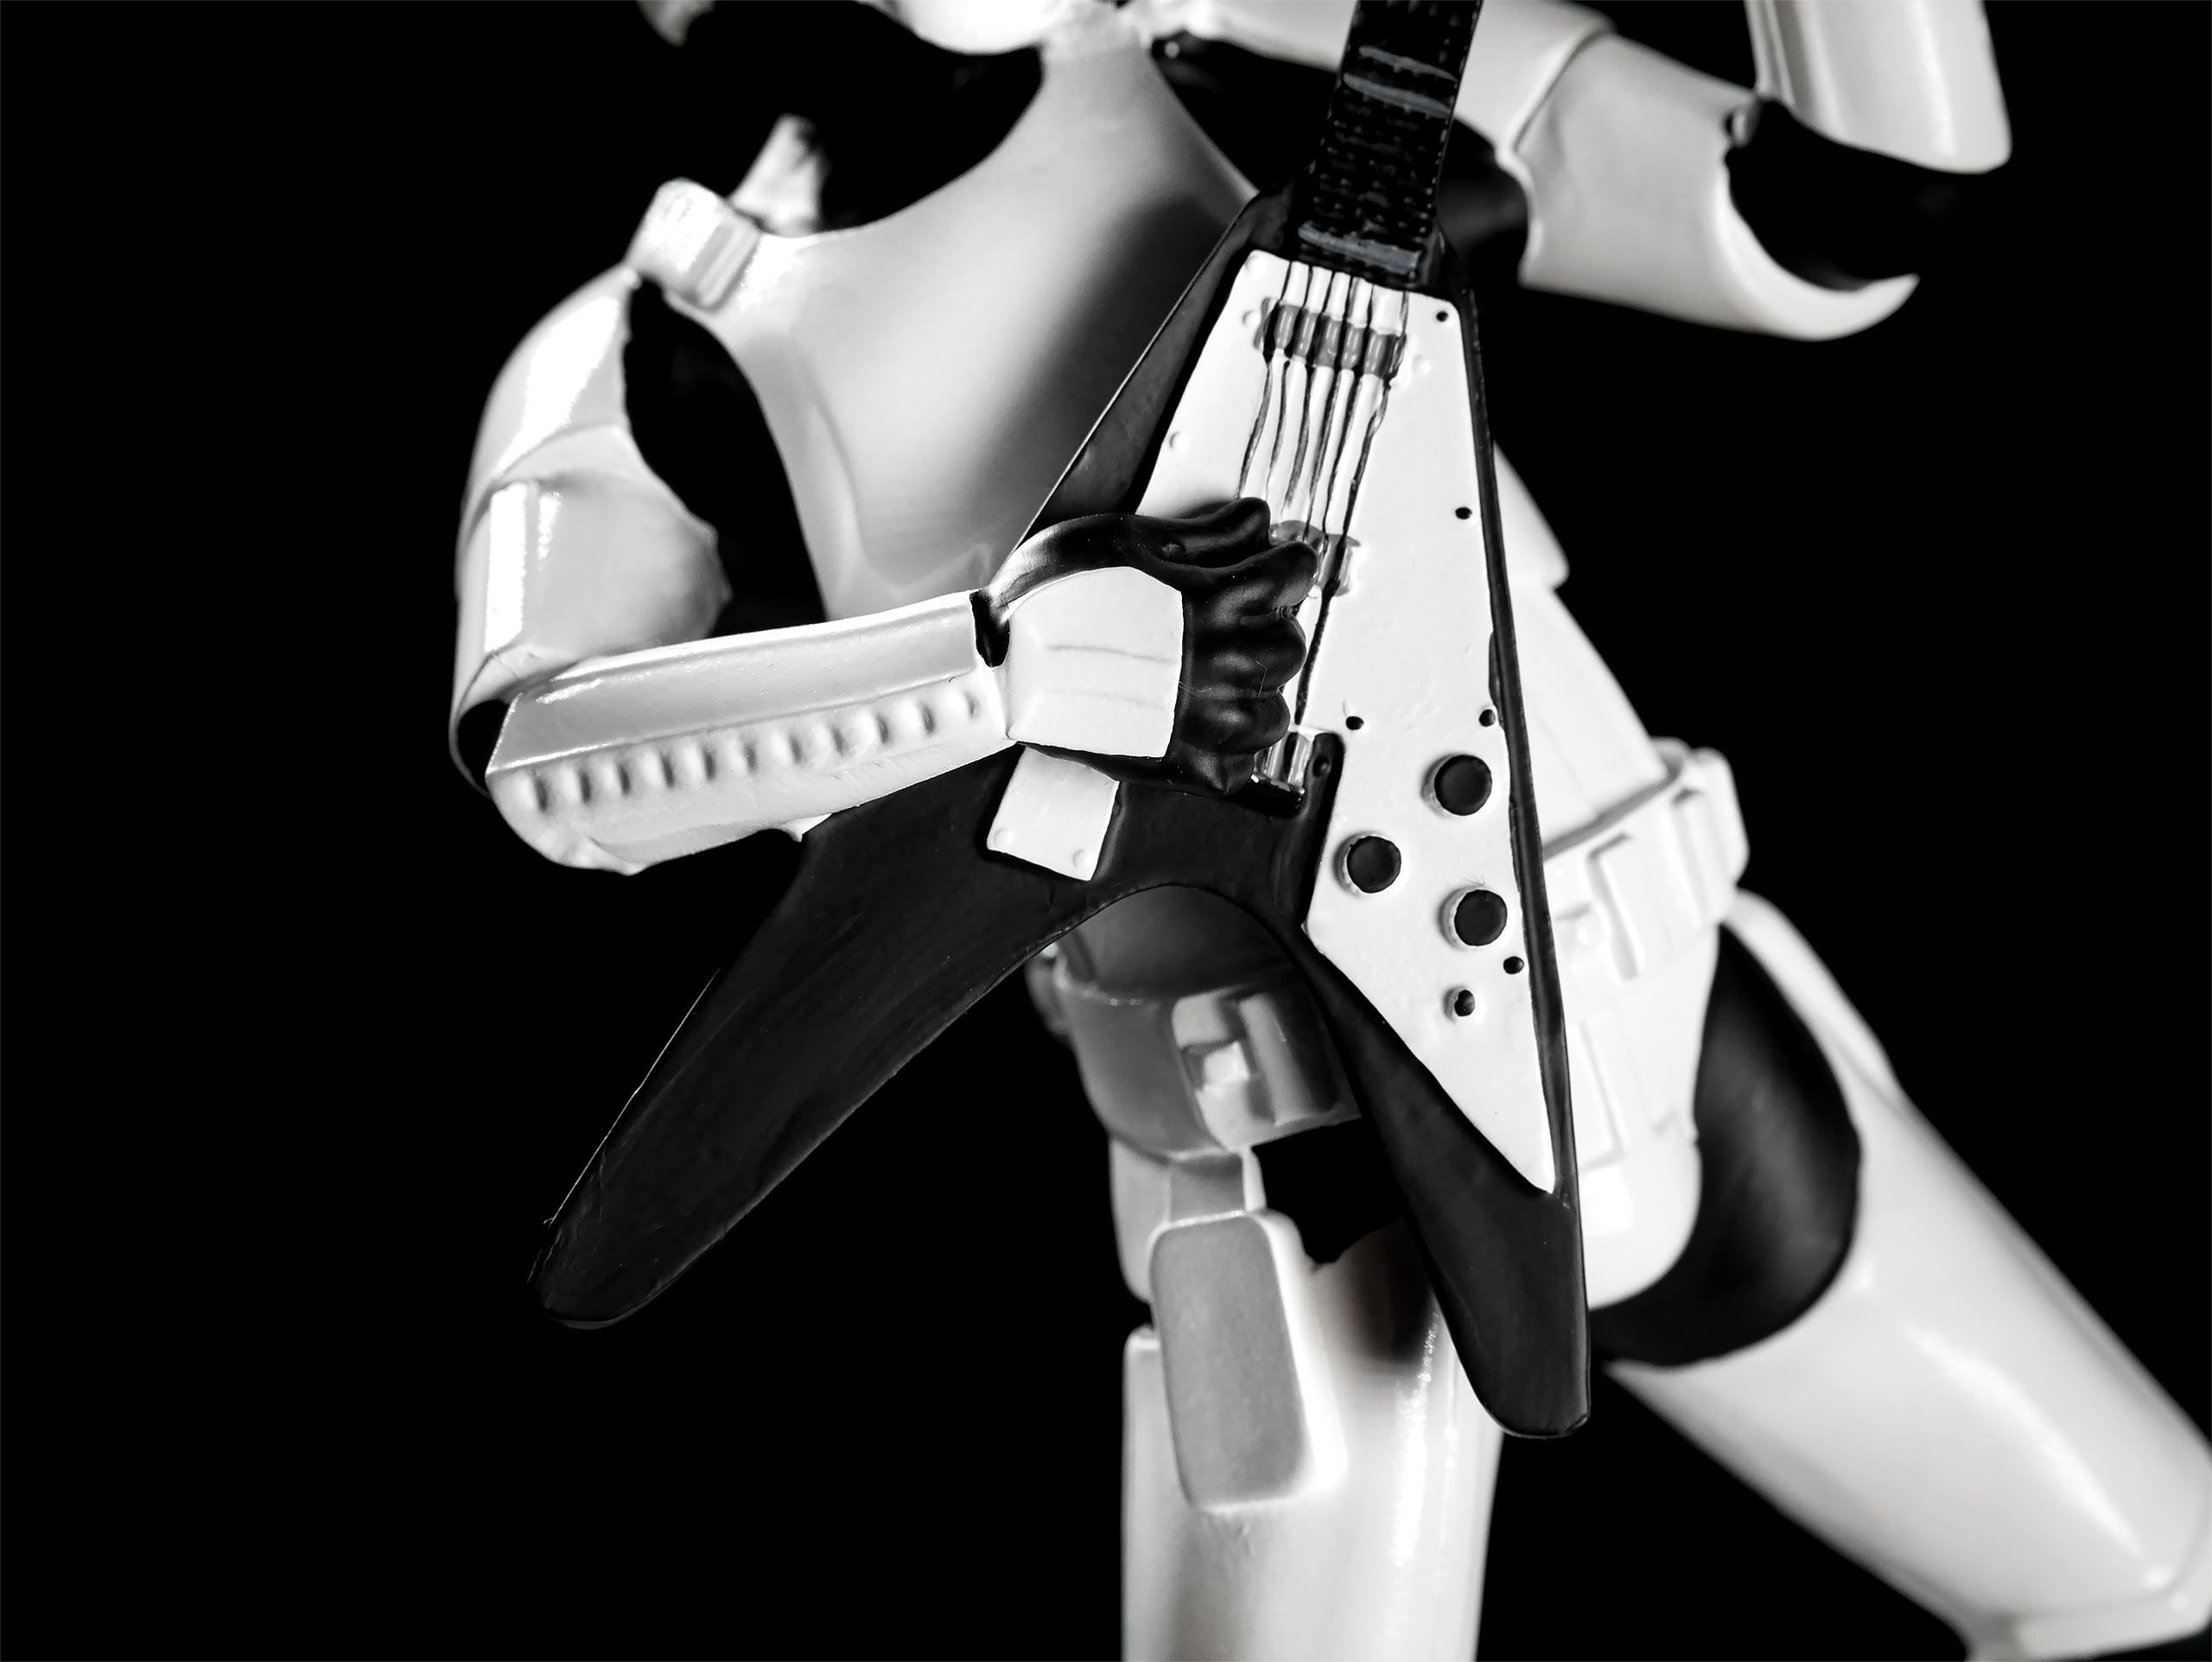 Figurine Rockstar Stormtrooper - Star Wars